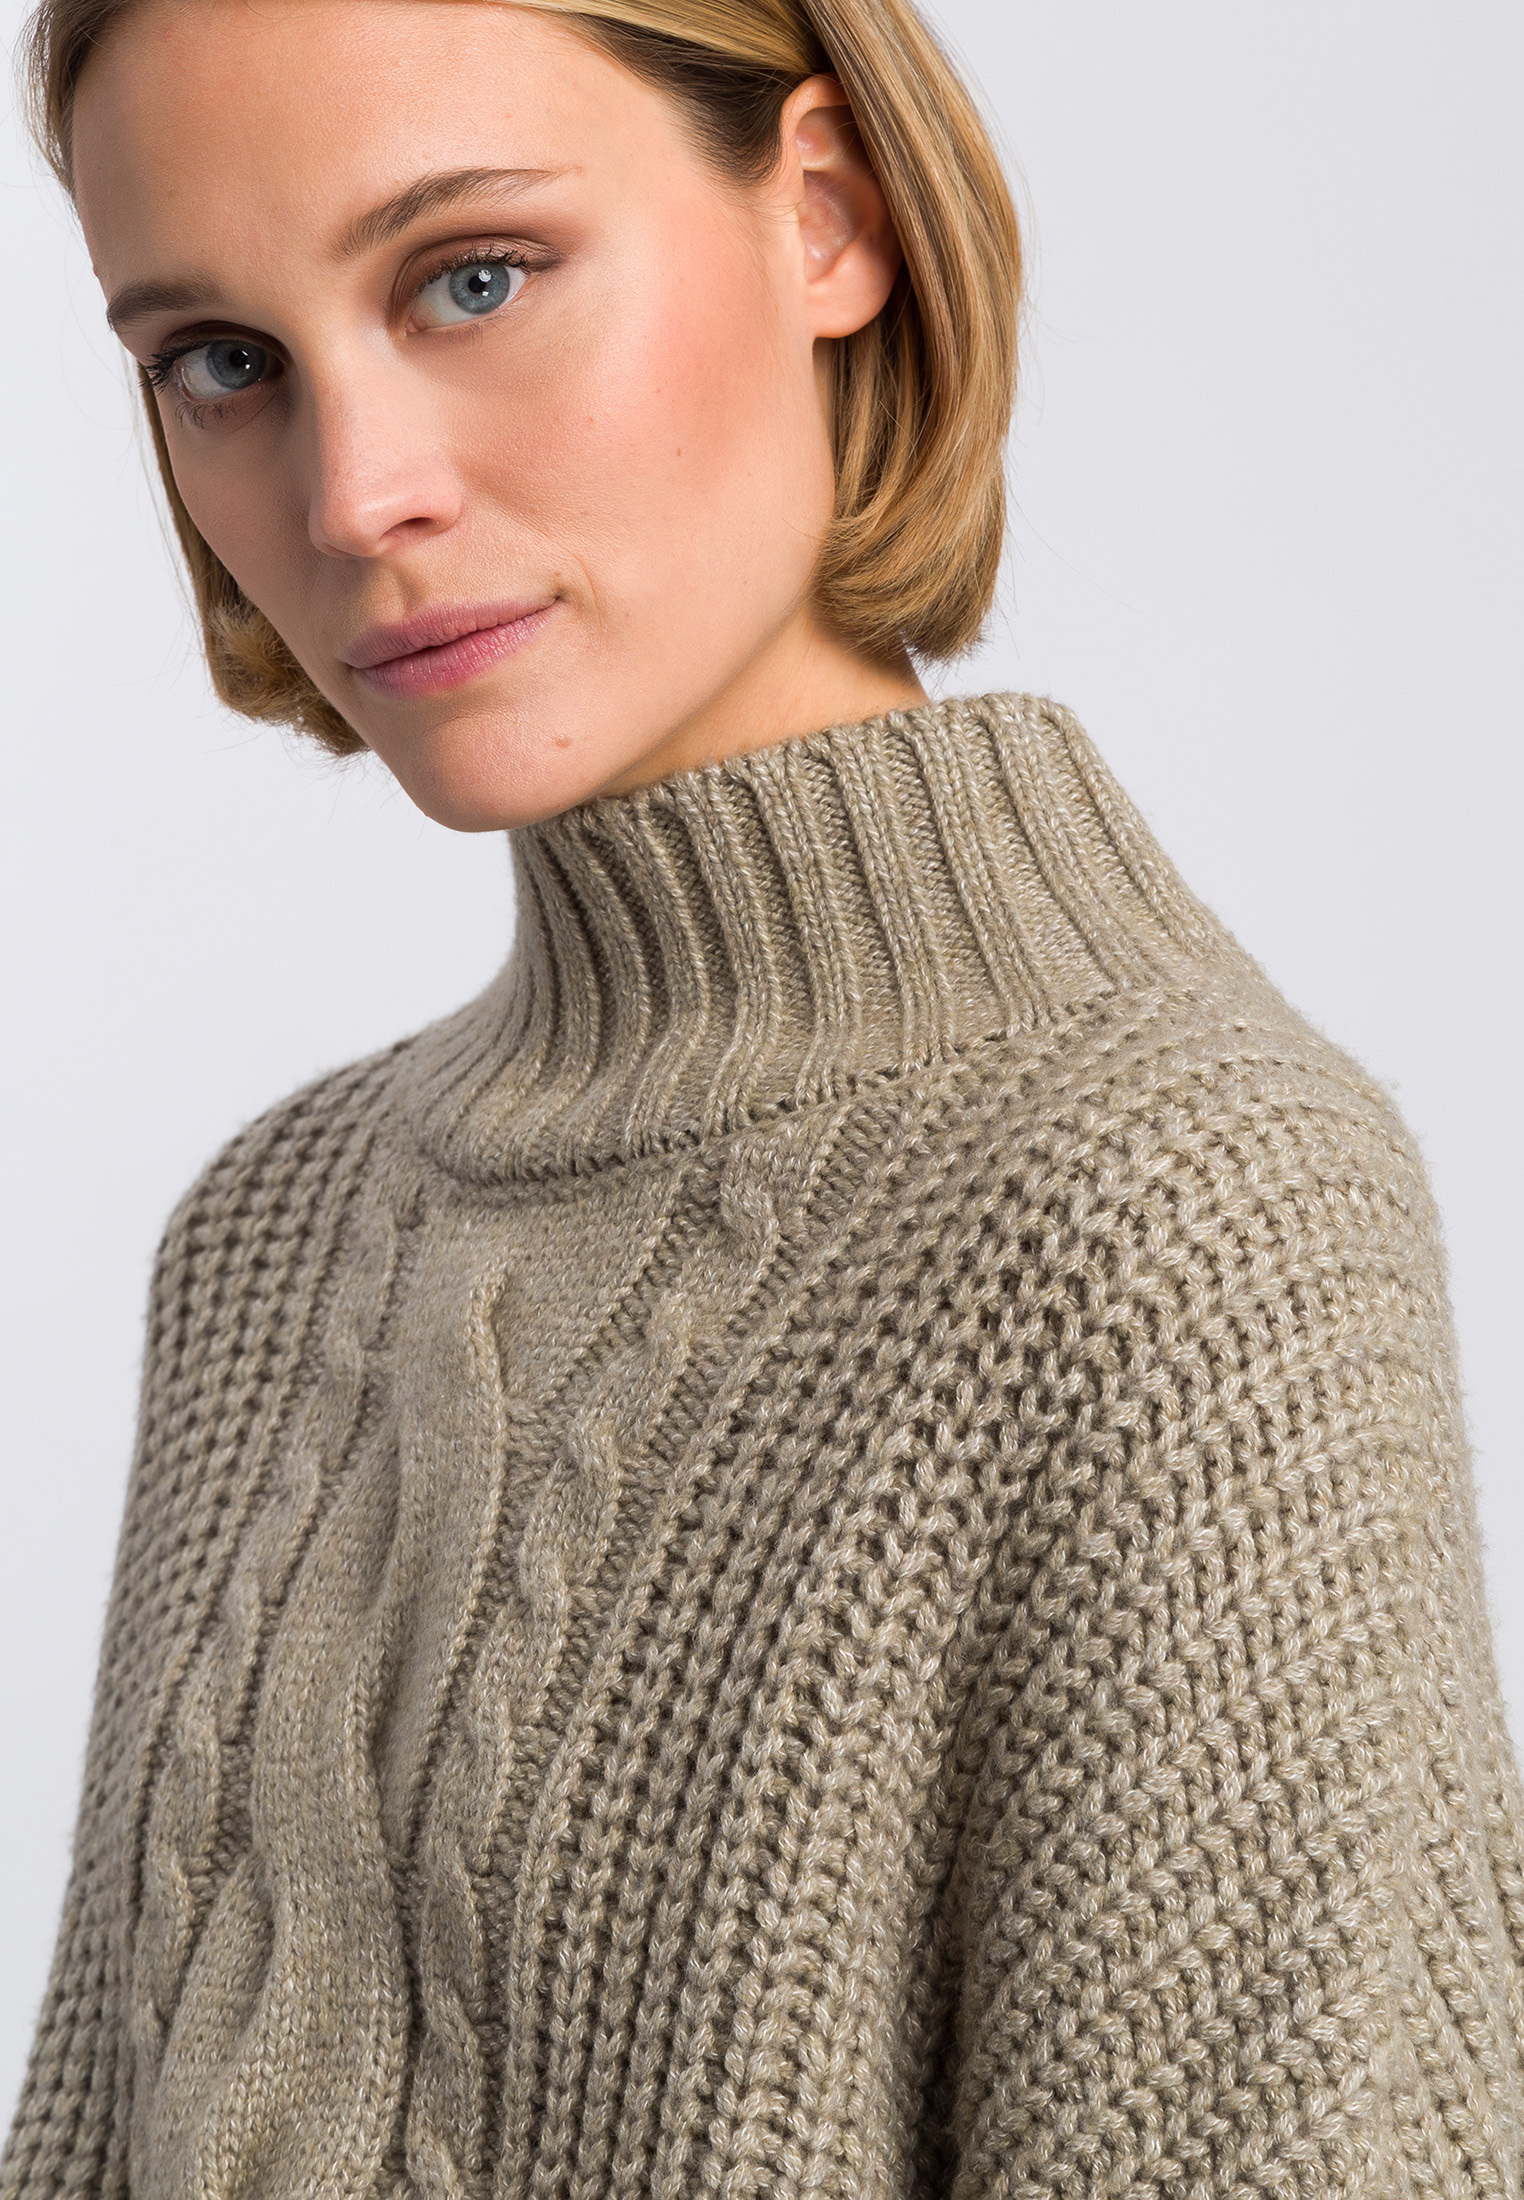 Boxy sweater with cable knit pattern | Knitwear | Fashion